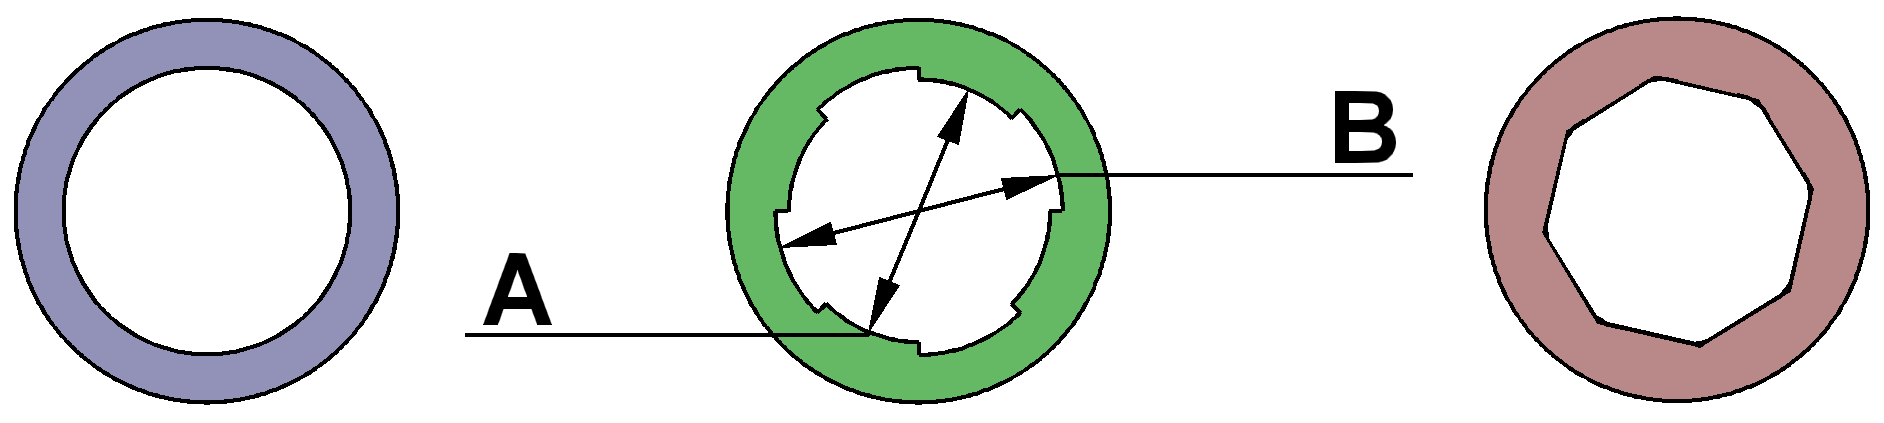 http://upload.wikimedia.org/wikipedia/commons/1/12/Gun_barrels_cross_sectional_drawing.png?uselang=ru